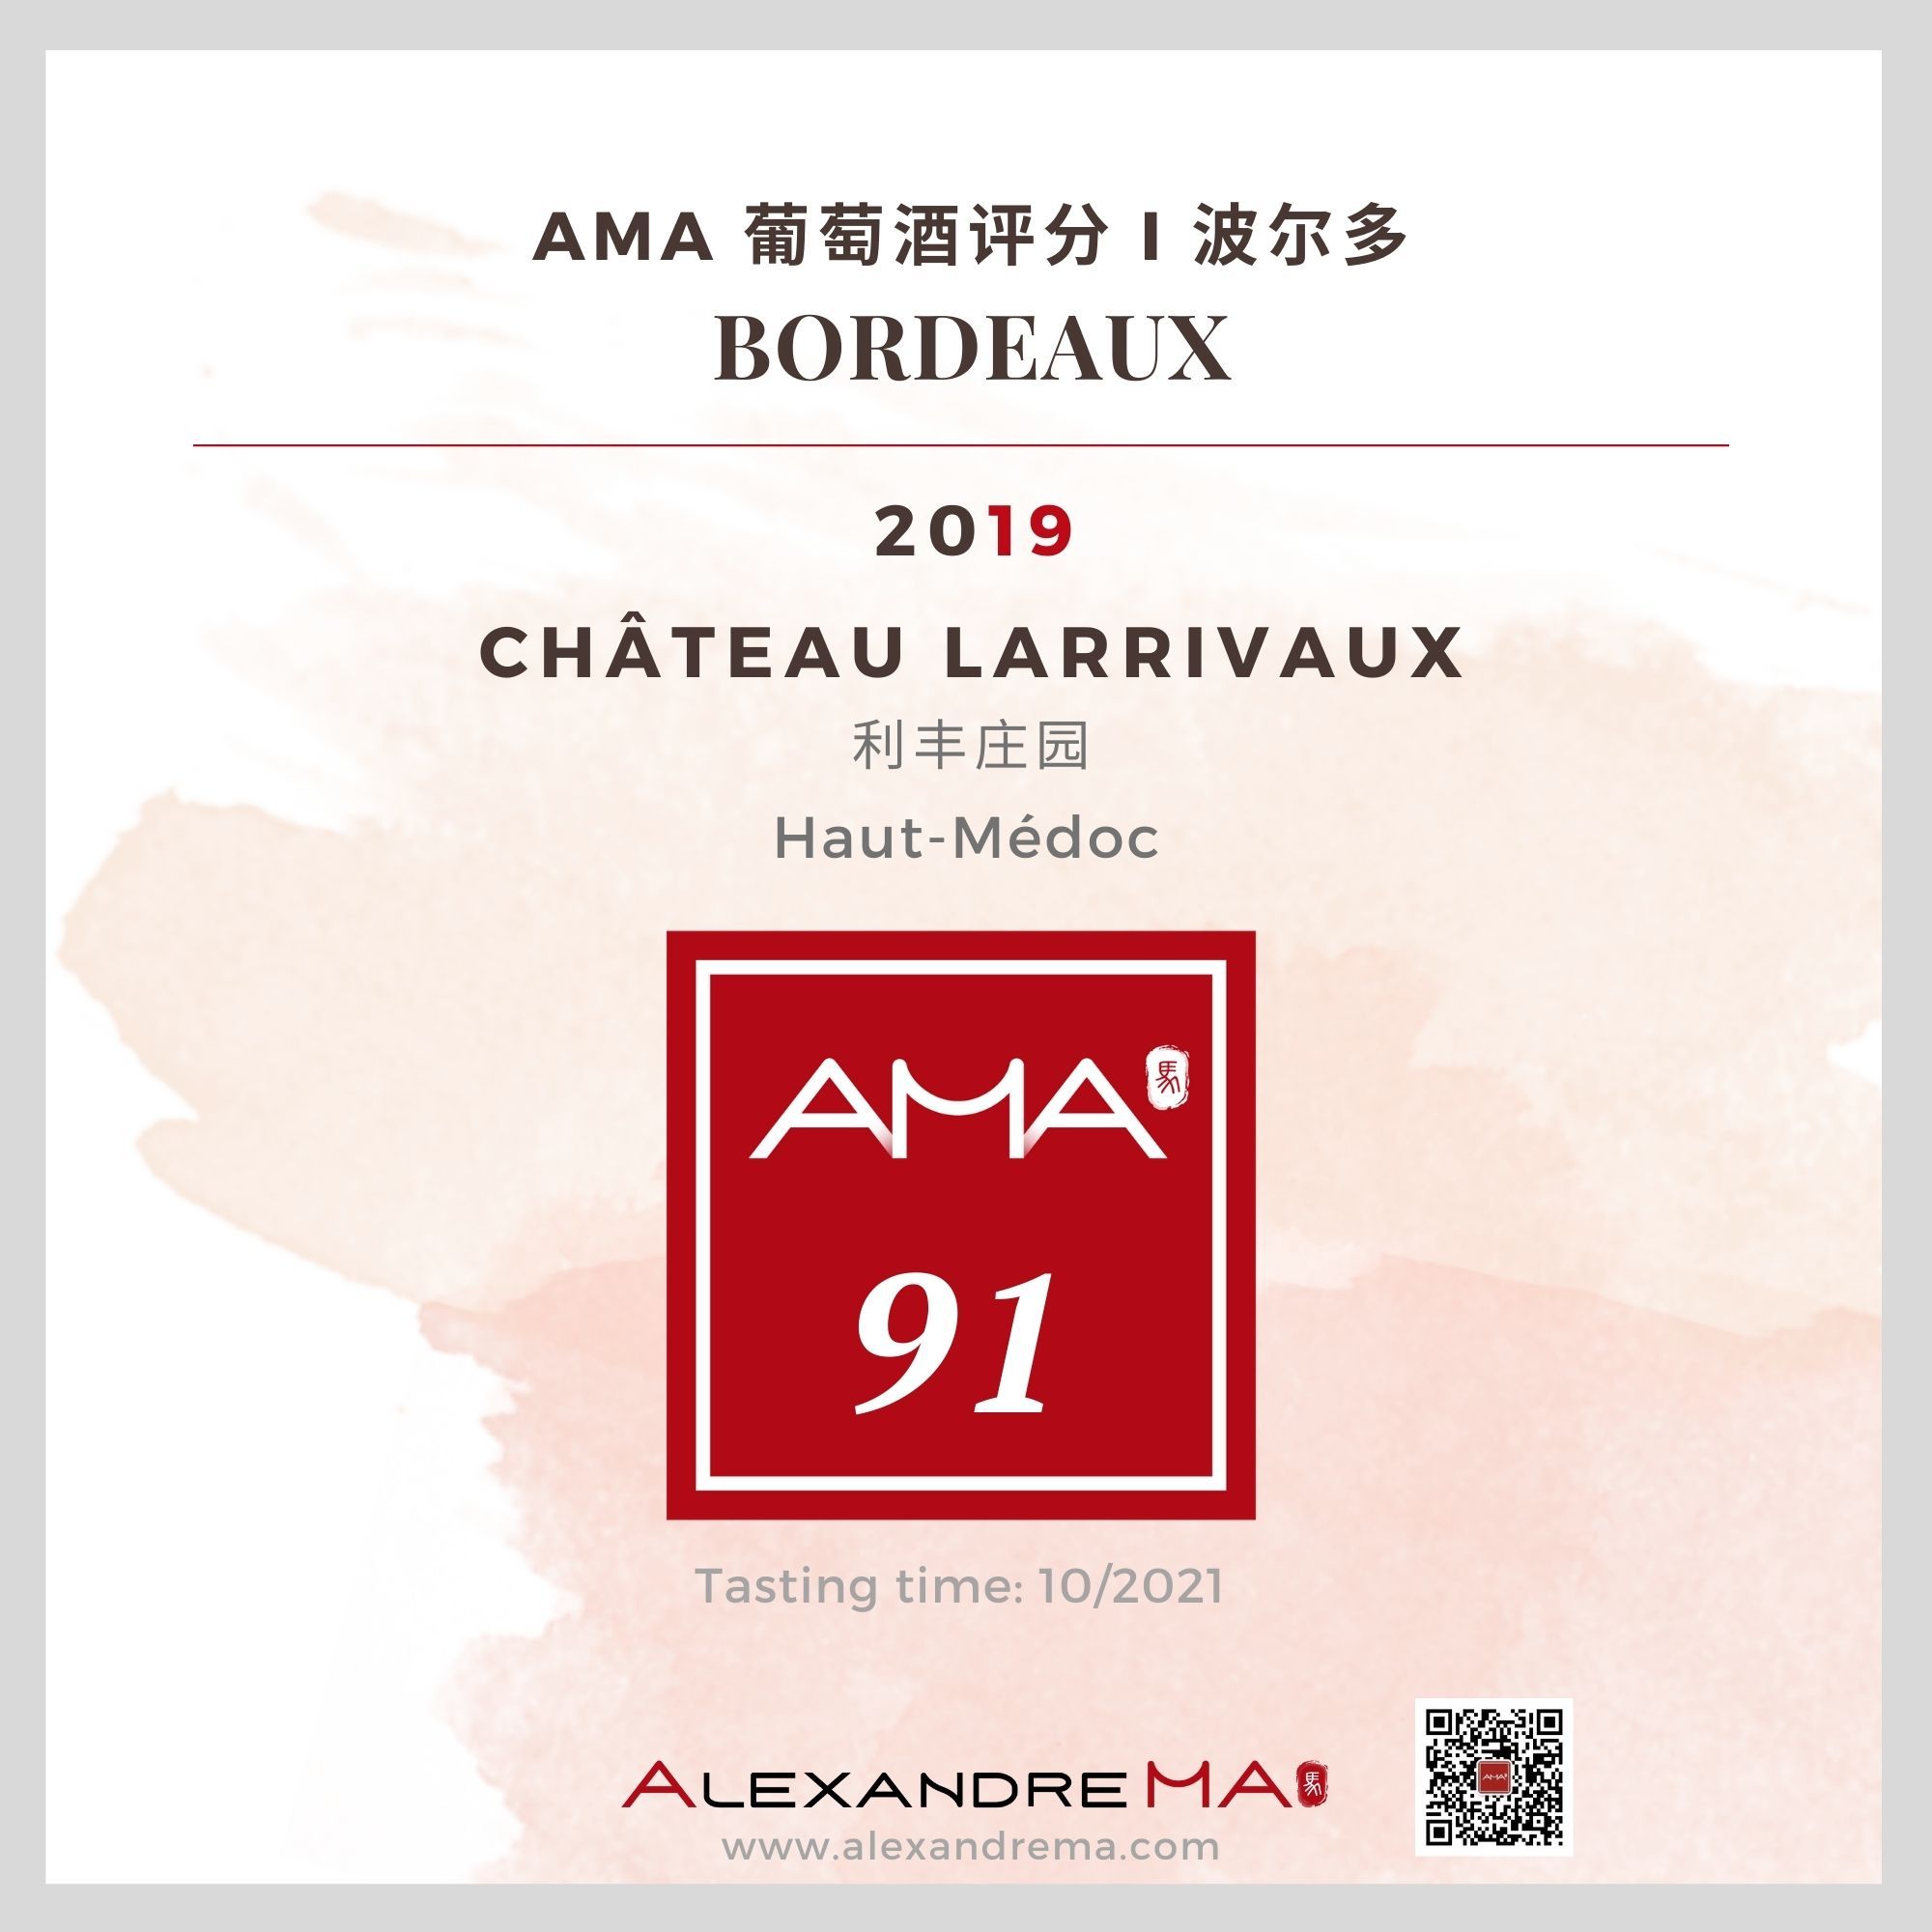 Château Larrivaux 2019 利丰庄园 - Alexandre Ma